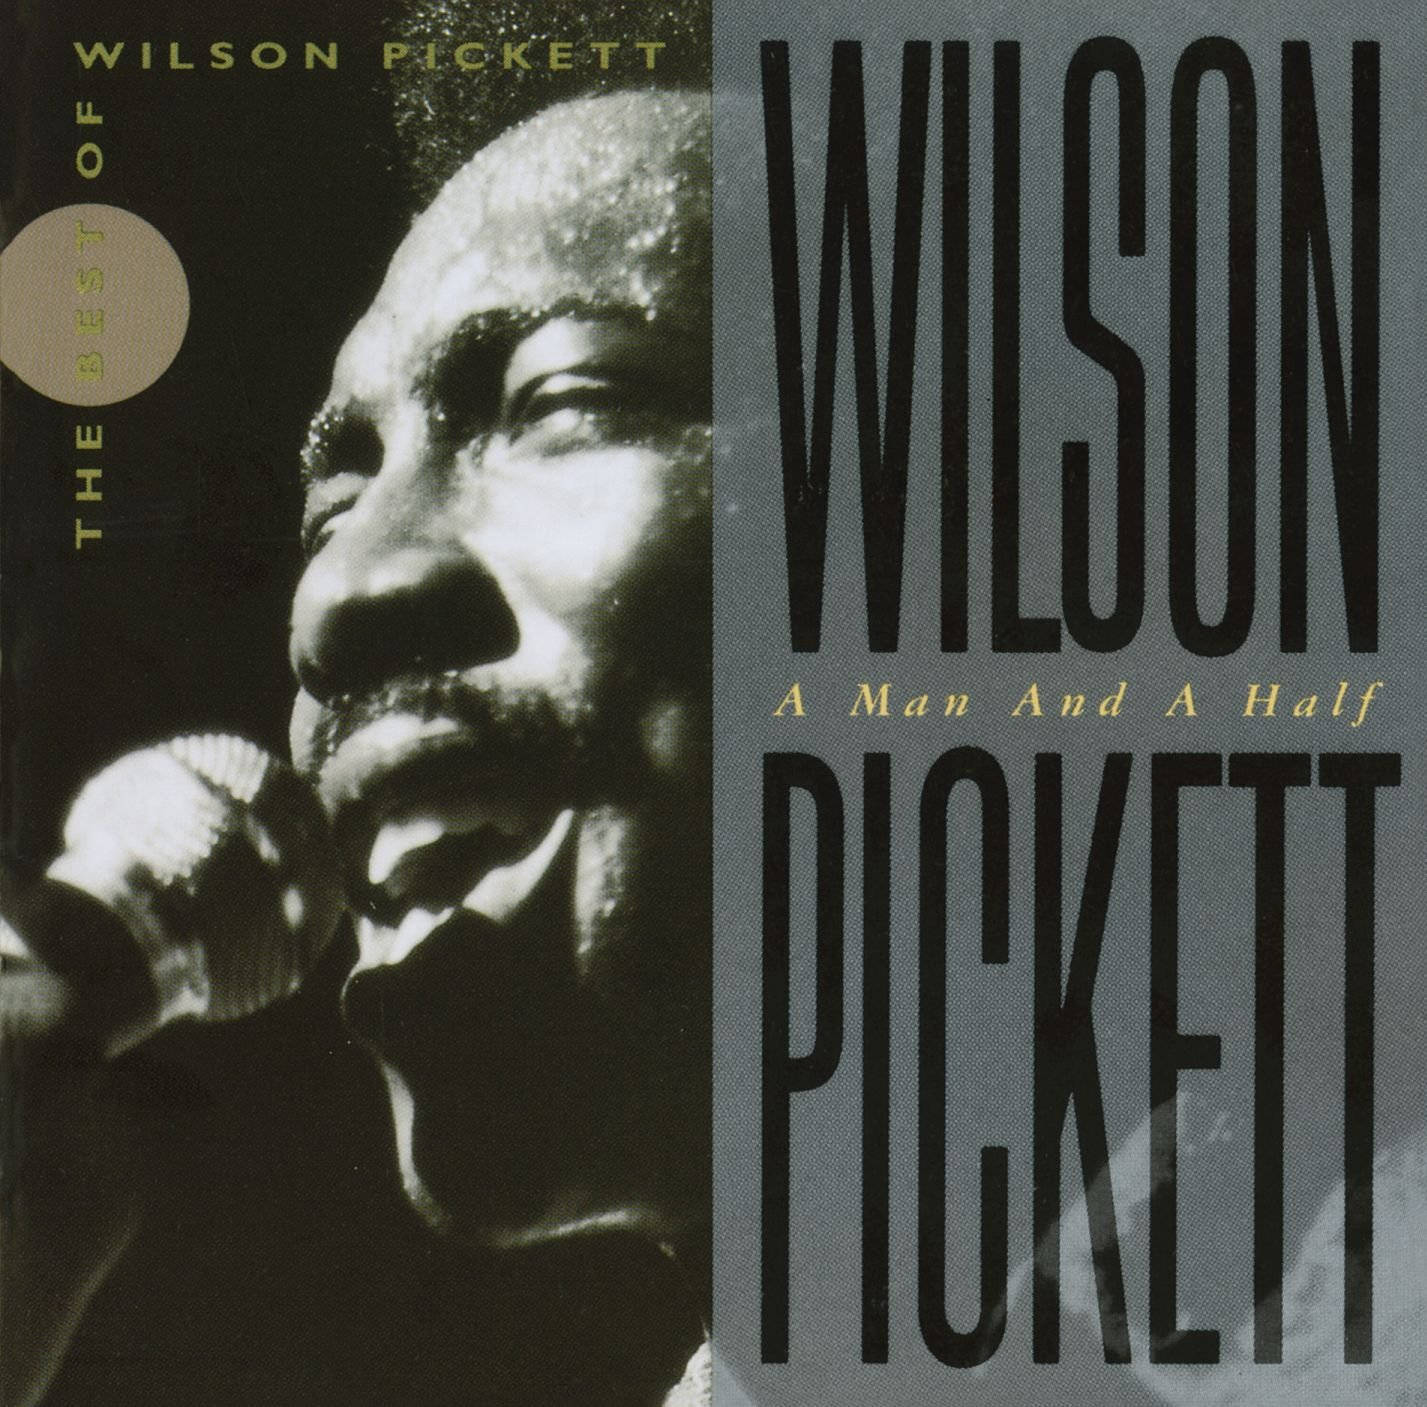 American Singer Wilson Pickett A Man And A Half Wallpaper